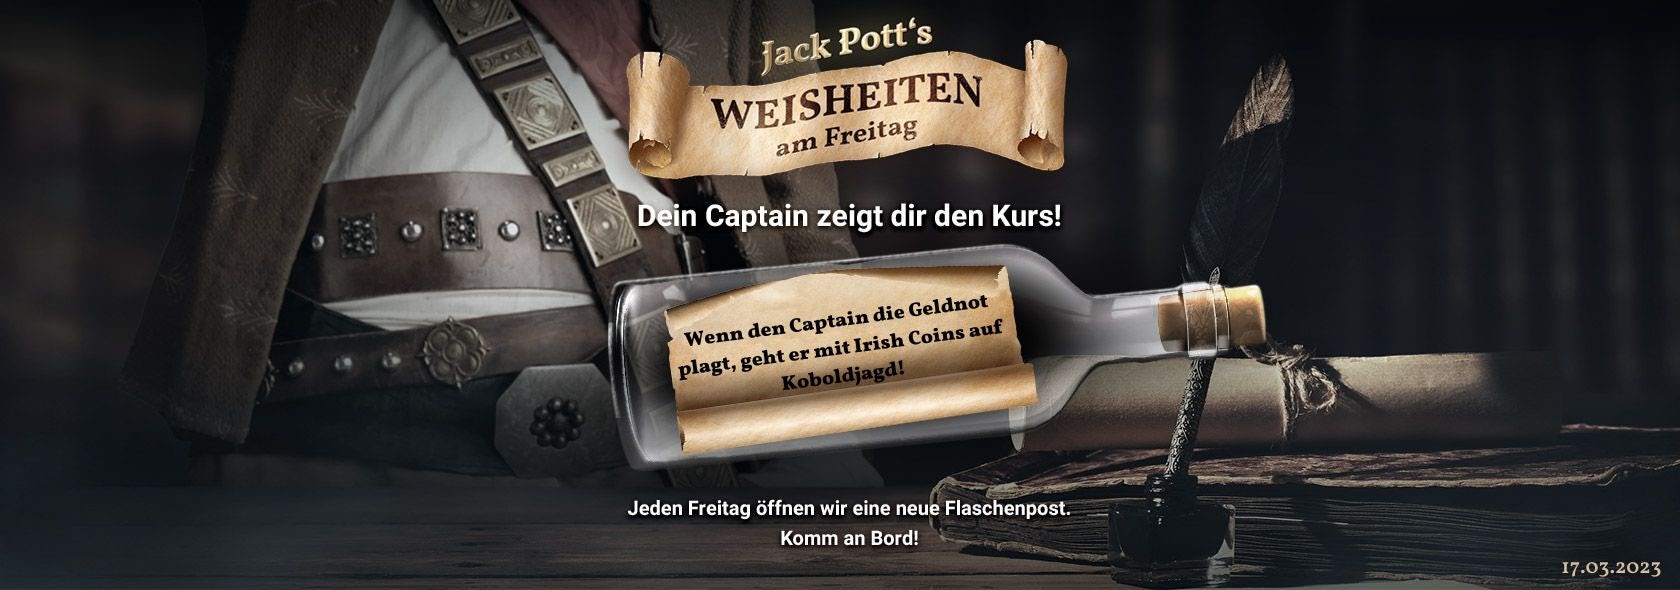 JPI-Header-Jack-Potts-Weisheit-Am-Freitag-1703